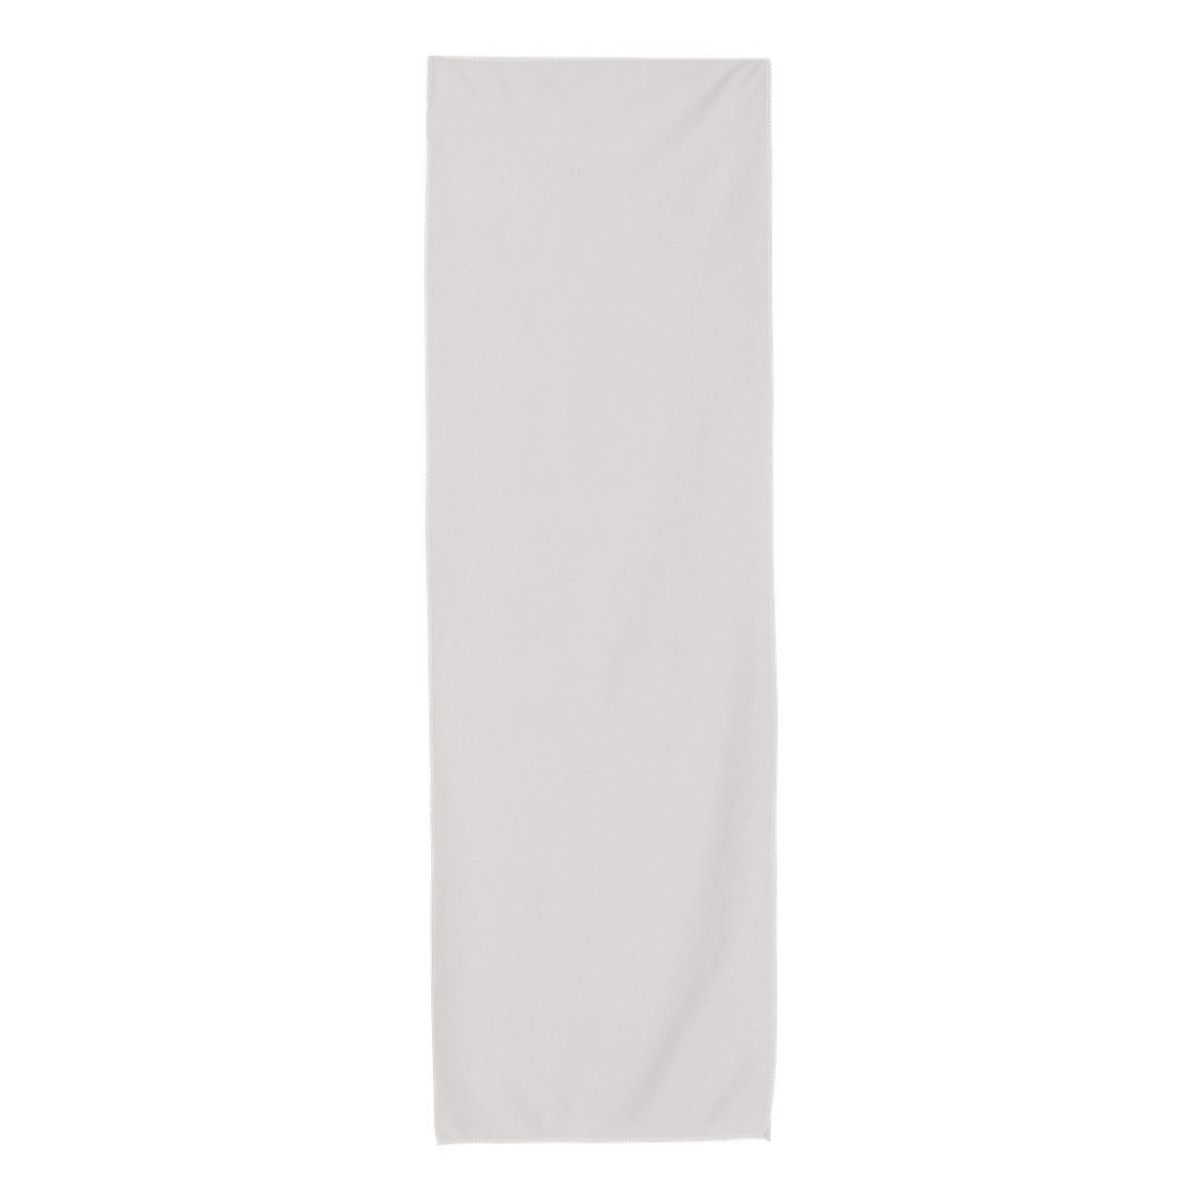 Carmel Towel Company Холодное полотенце, серый face towel nautical anchor black white soft bath hotel spa hand gym sport towel кухонное полотенце